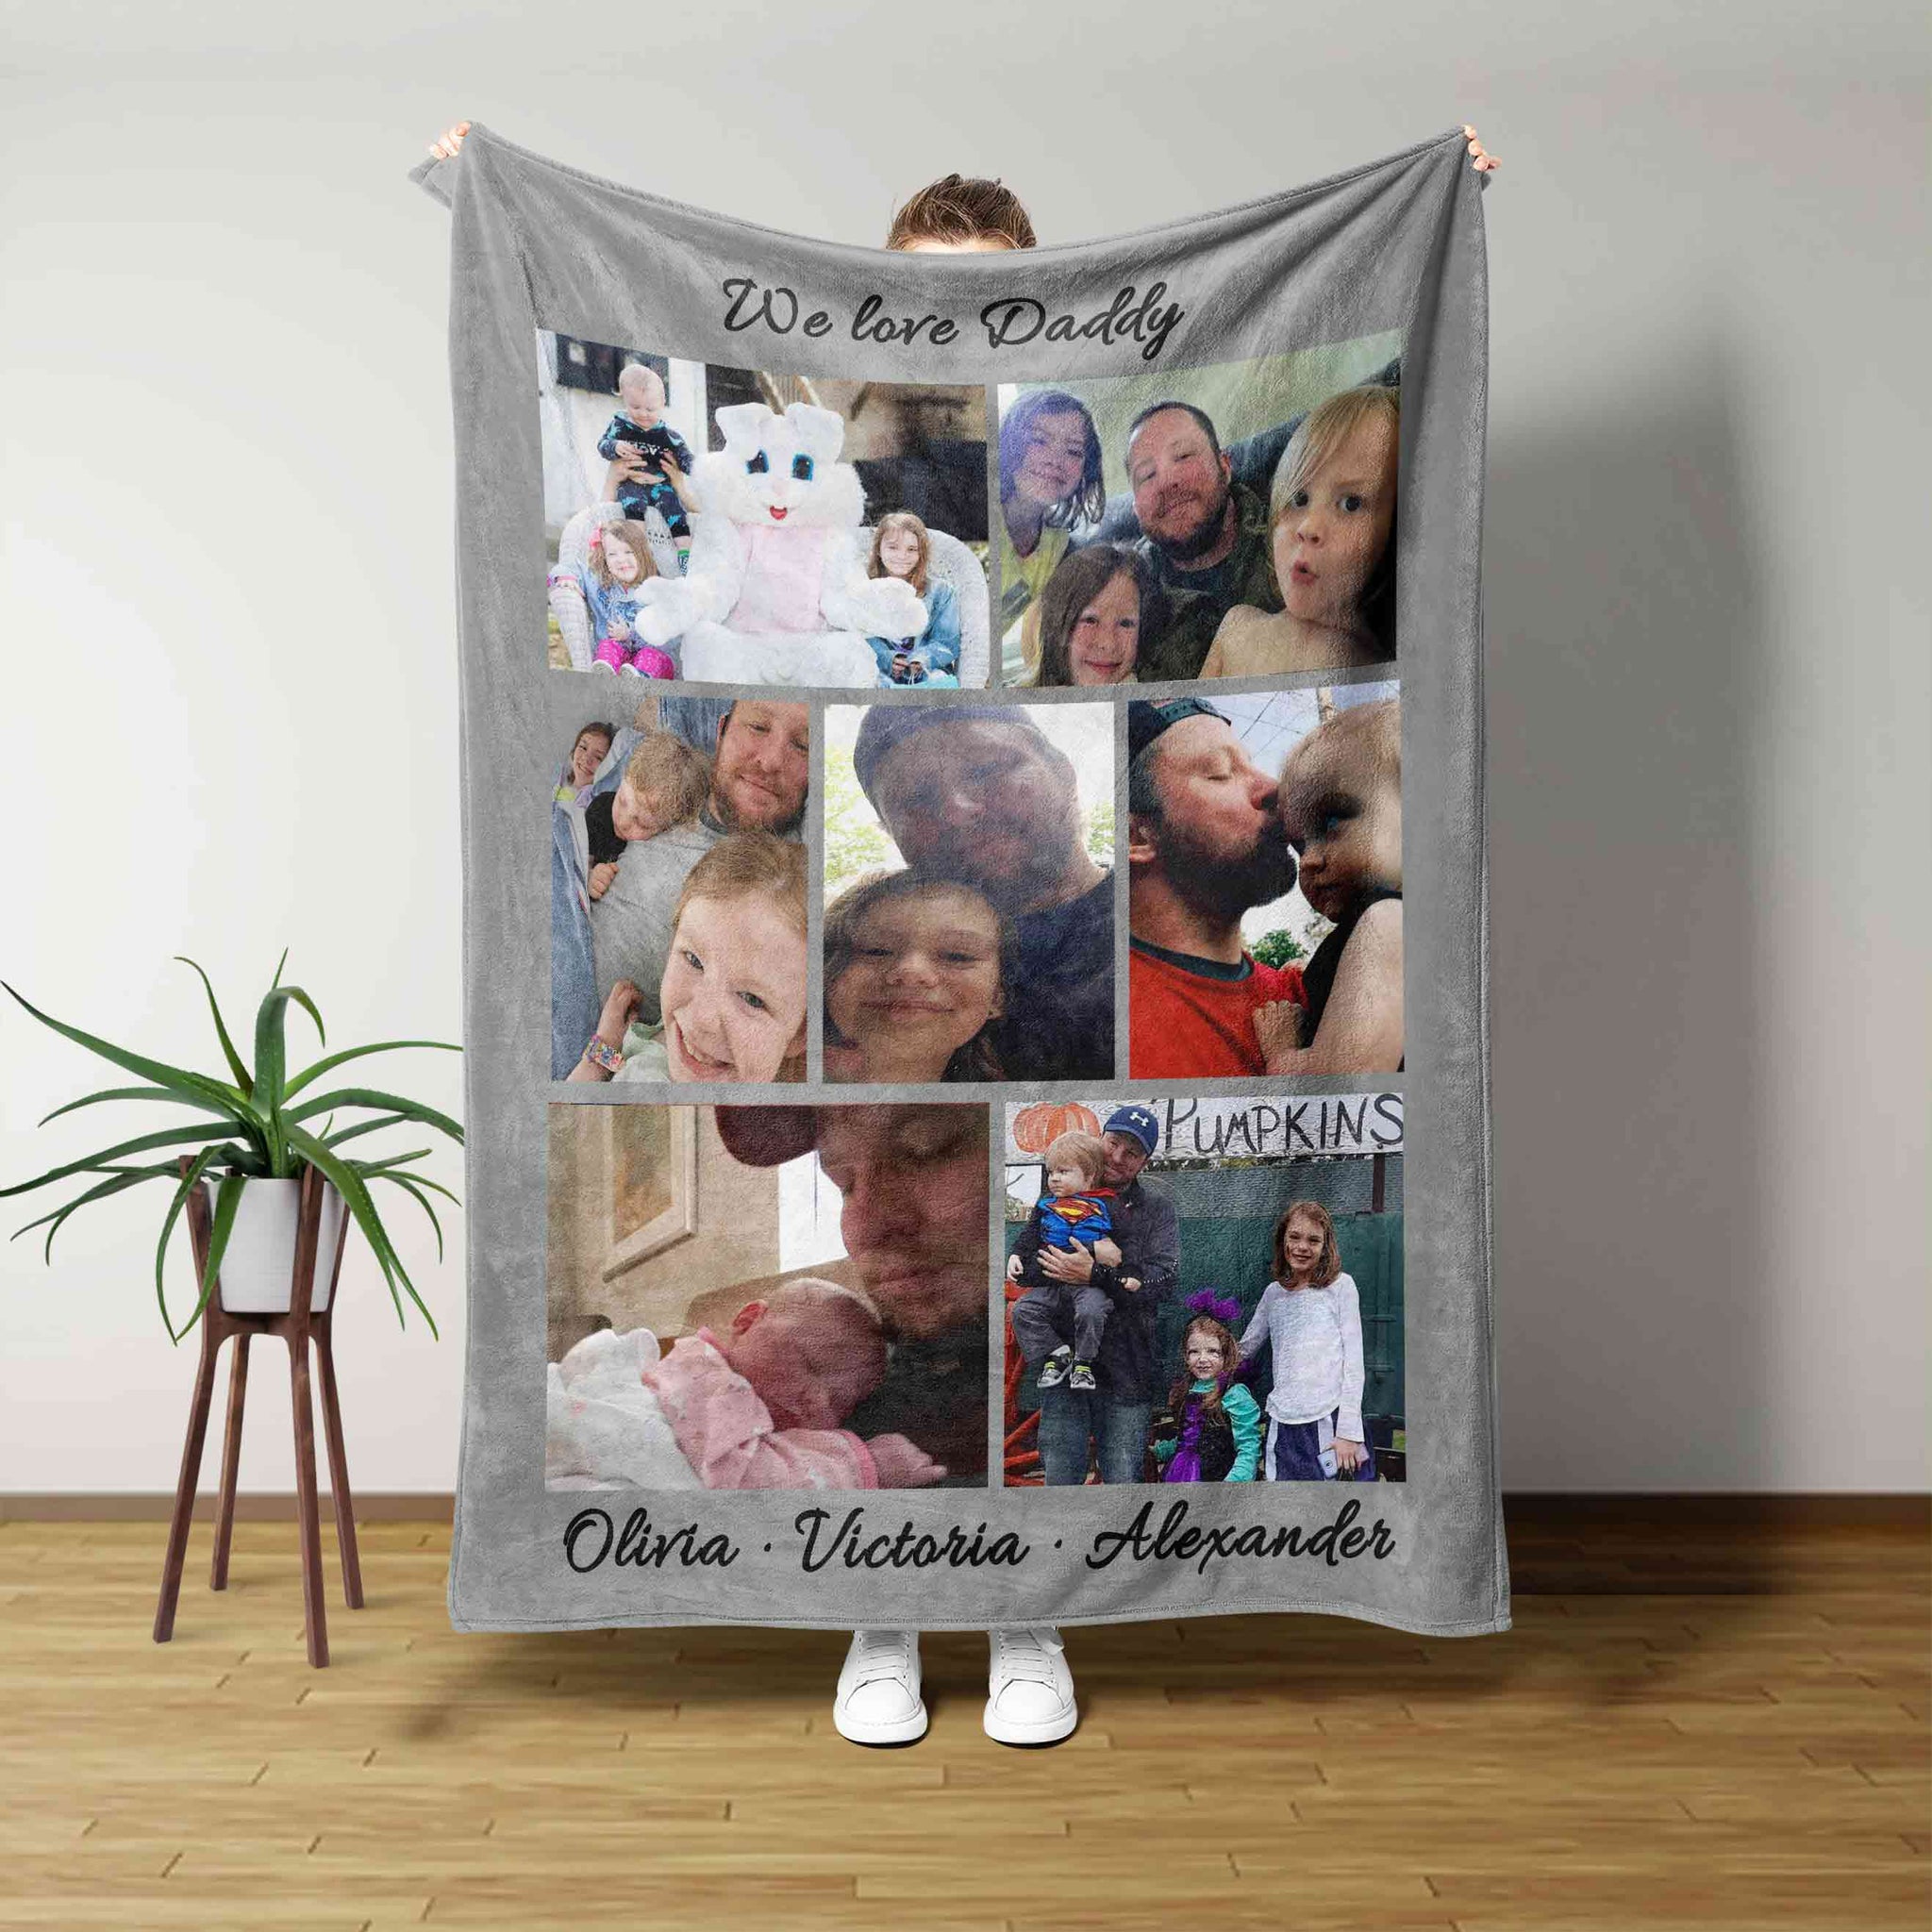 We Love Daddy Blanket, Dad Blanket, Personalized Image Blanket, Personalized Name Blanket, Family Blanket, Gift Blanket